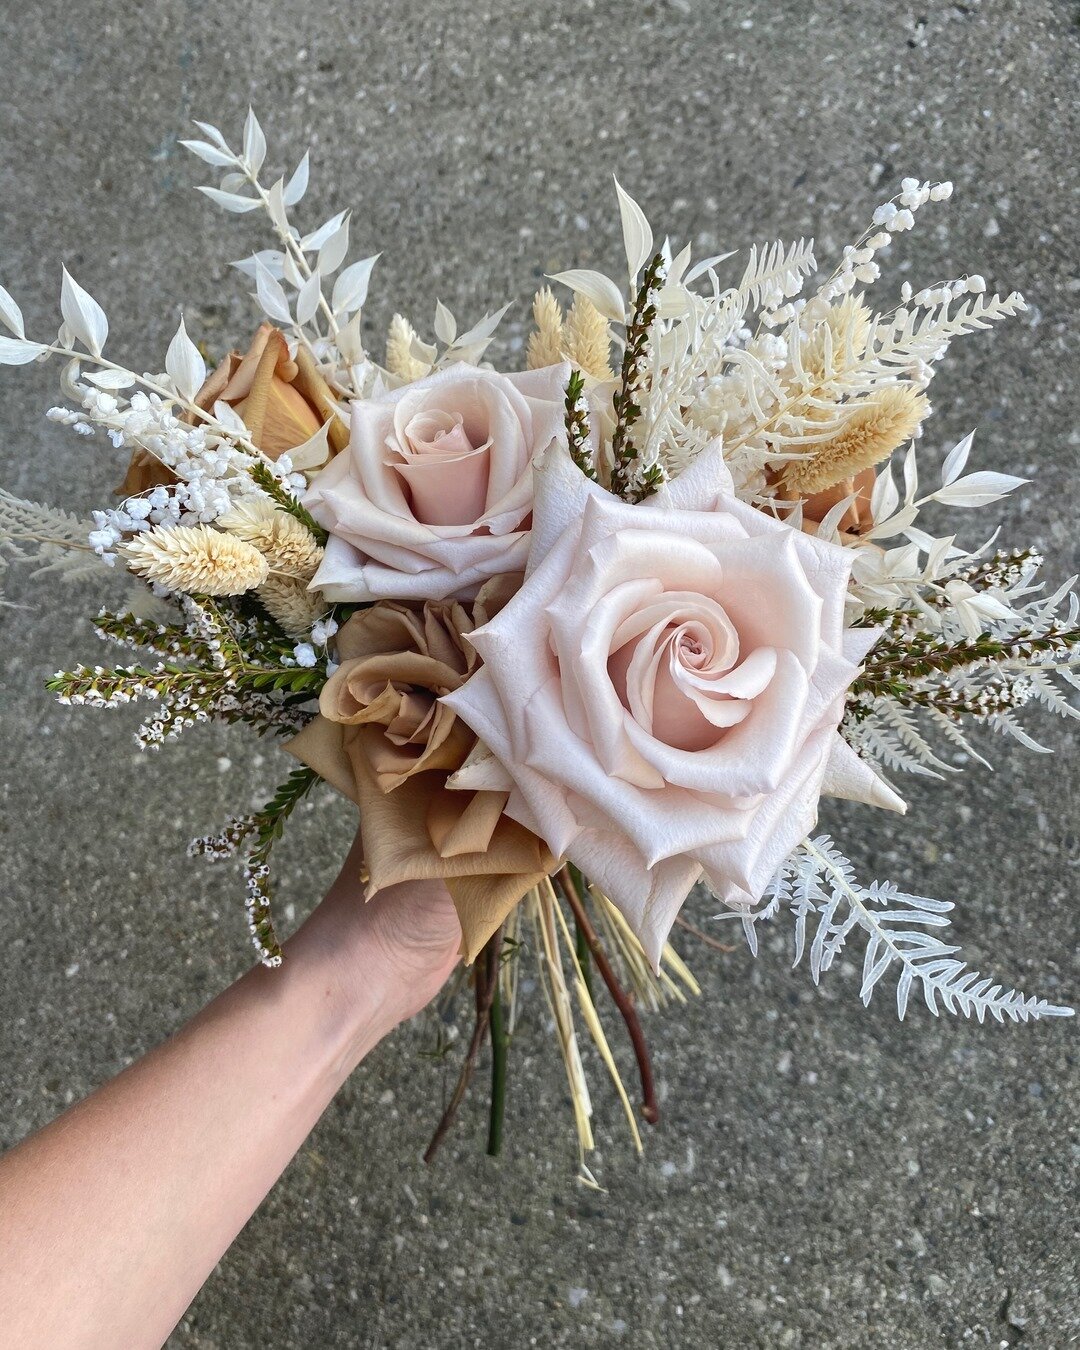 Happy Friday! ⠀⠀⠀⠀⠀⠀⠀⠀⠀
⠀⠀⠀⠀⠀⠀⠀⠀⠀
.⠀⠀⠀⠀⠀⠀⠀⠀⠀
.⠀⠀⠀⠀⠀⠀⠀⠀⠀
.⠀⠀⠀⠀⠀⠀⠀⠀⠀
.⠀⠀⠀⠀⠀⠀⠀⠀⠀
.⠀⠀⠀⠀⠀⠀⠀⠀⠀
.⠀⠀⠀⠀⠀⠀⠀⠀⠀
.⠀⠀⠀⠀⠀⠀⠀⠀⠀
.⠀⠀⠀⠀⠀⠀⠀⠀⠀
#wedding #weddings #weddingflowers #weddingflorist #bride #bridesmaids #bouquet #flowers #florist #chicagobride #chicagoflorist 